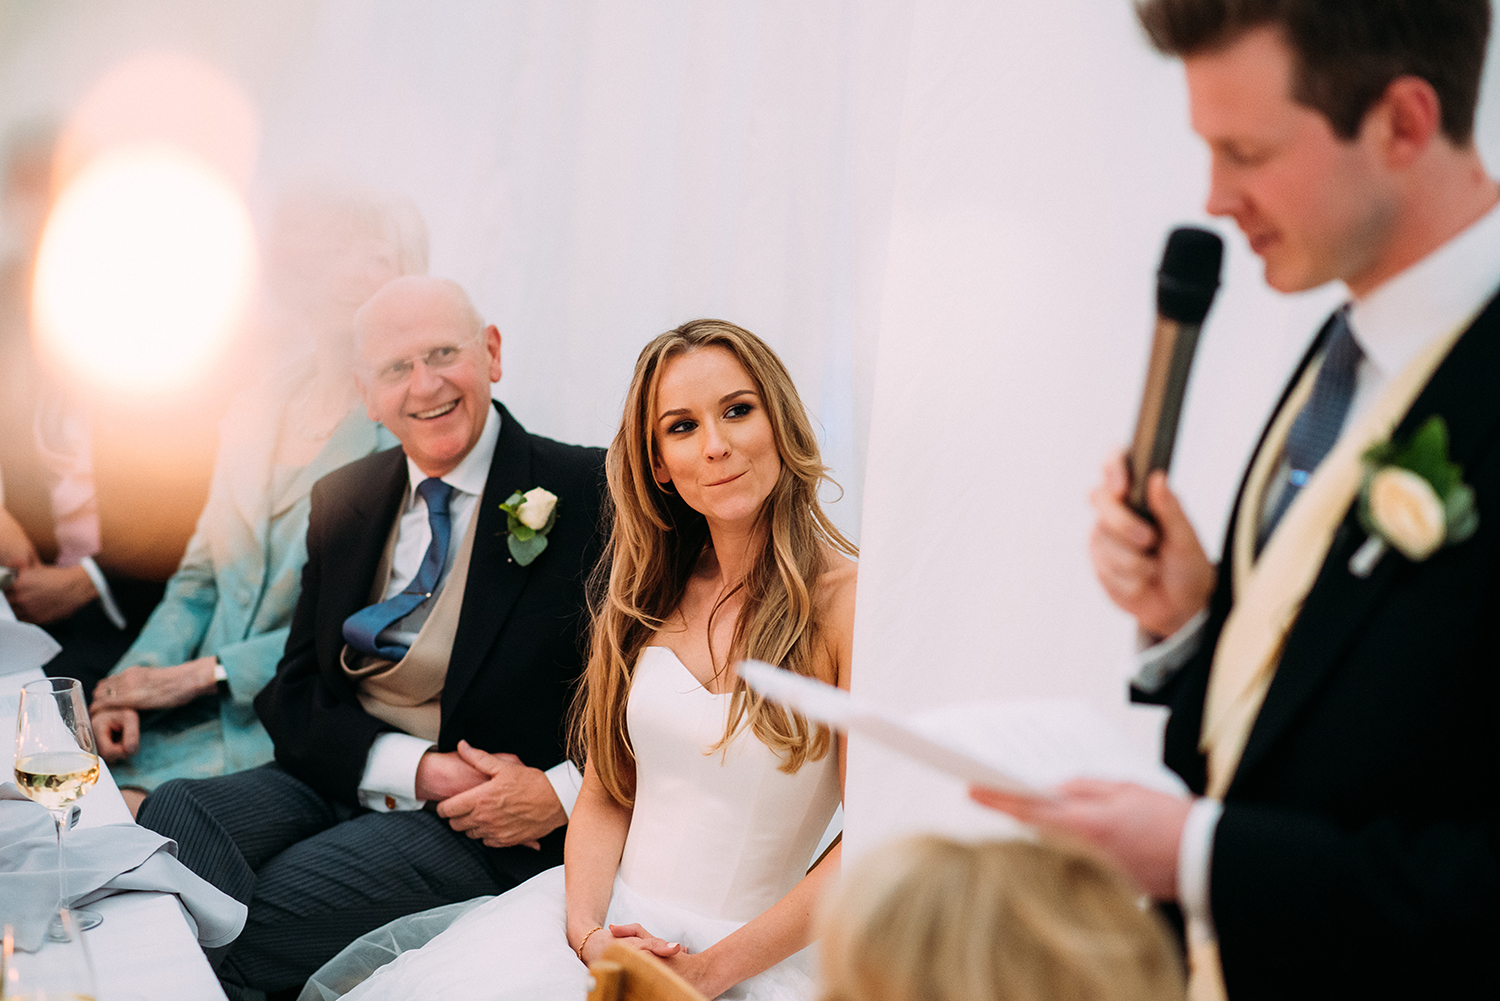  bride looking at groom during his speech 